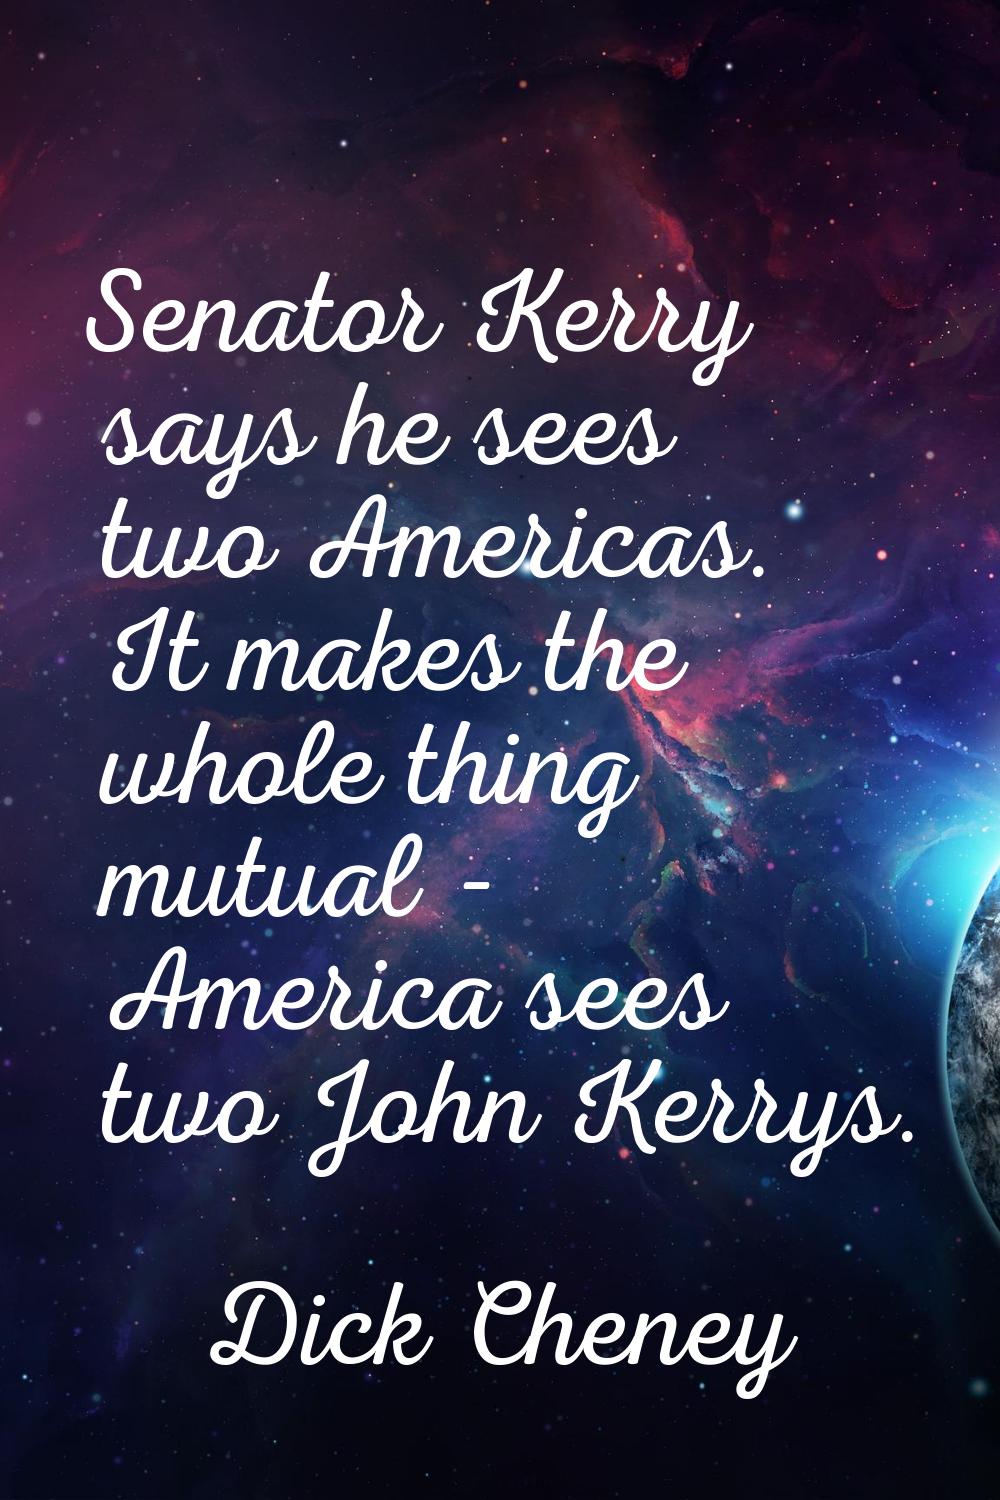 Senator Kerry says he sees two Americas. It makes the whole thing mutual - America sees two John Ke